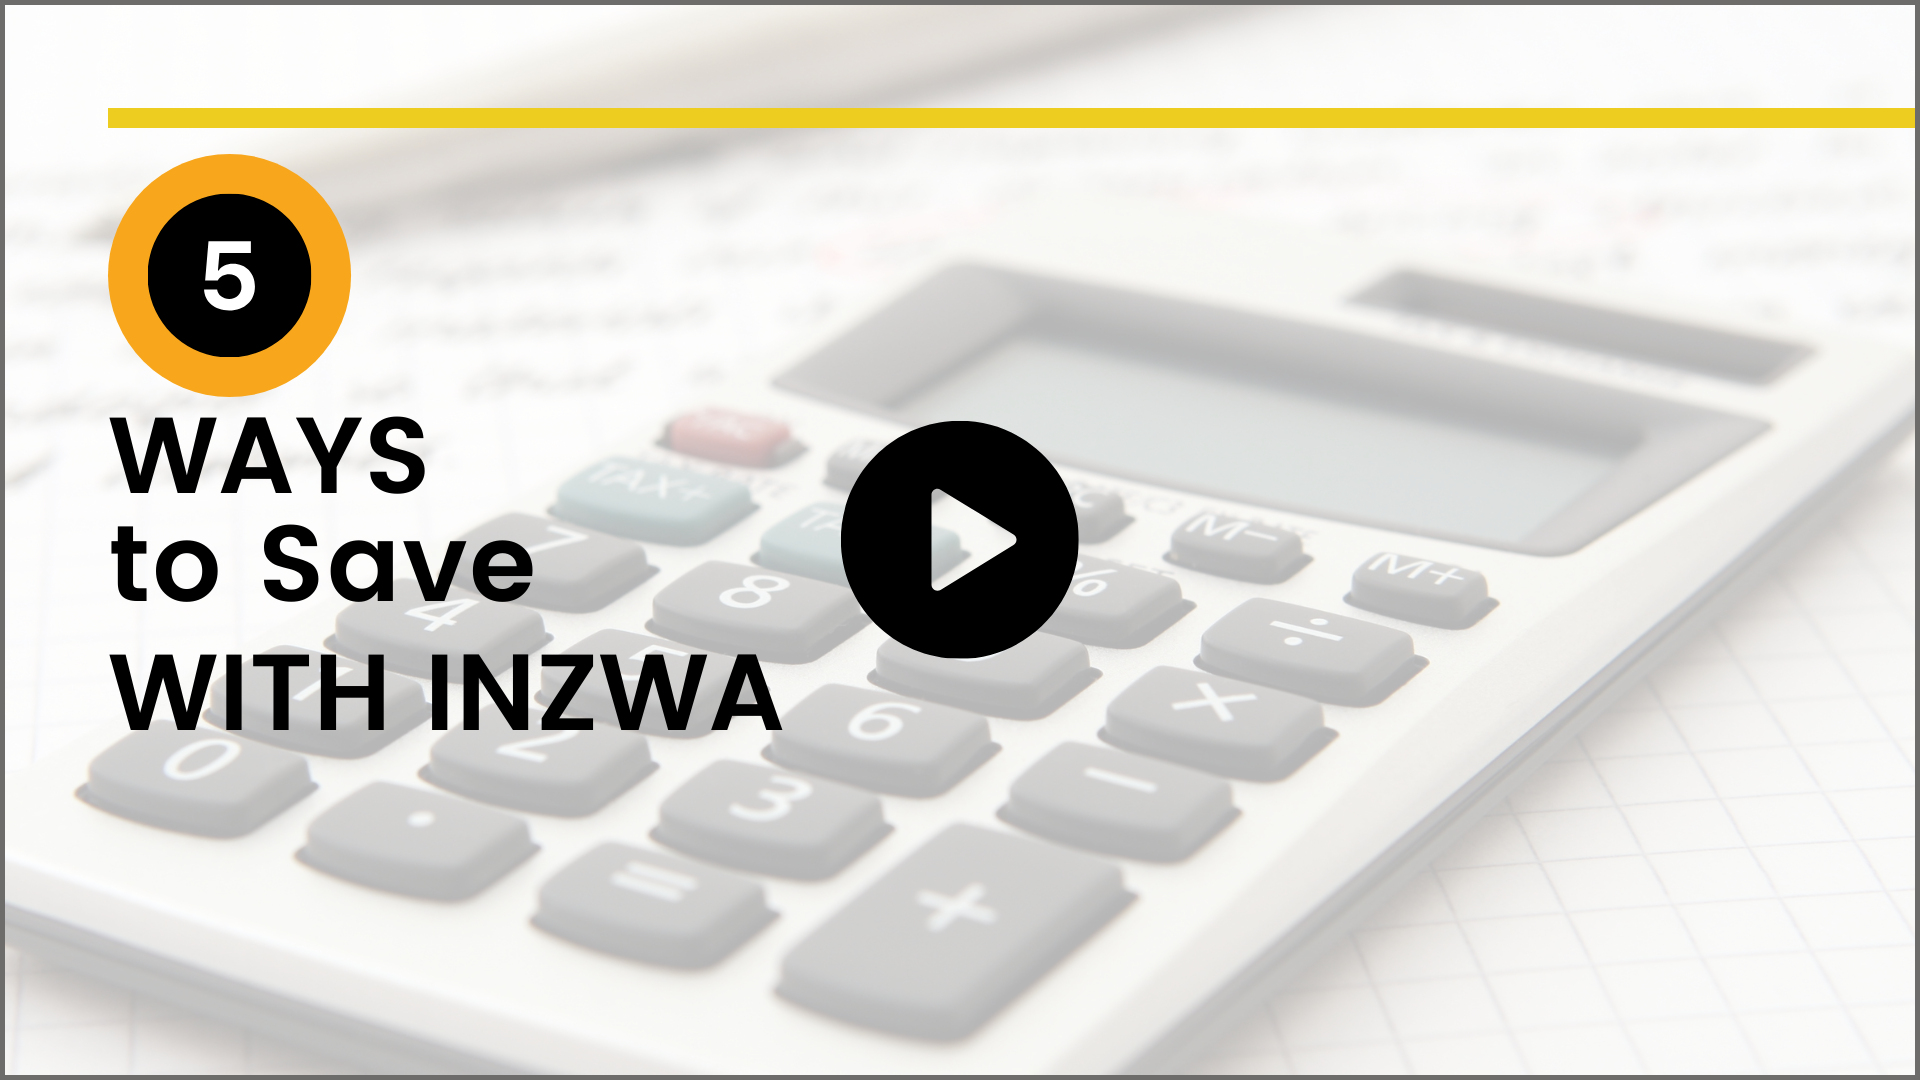 Five ways to savewith Inzwa